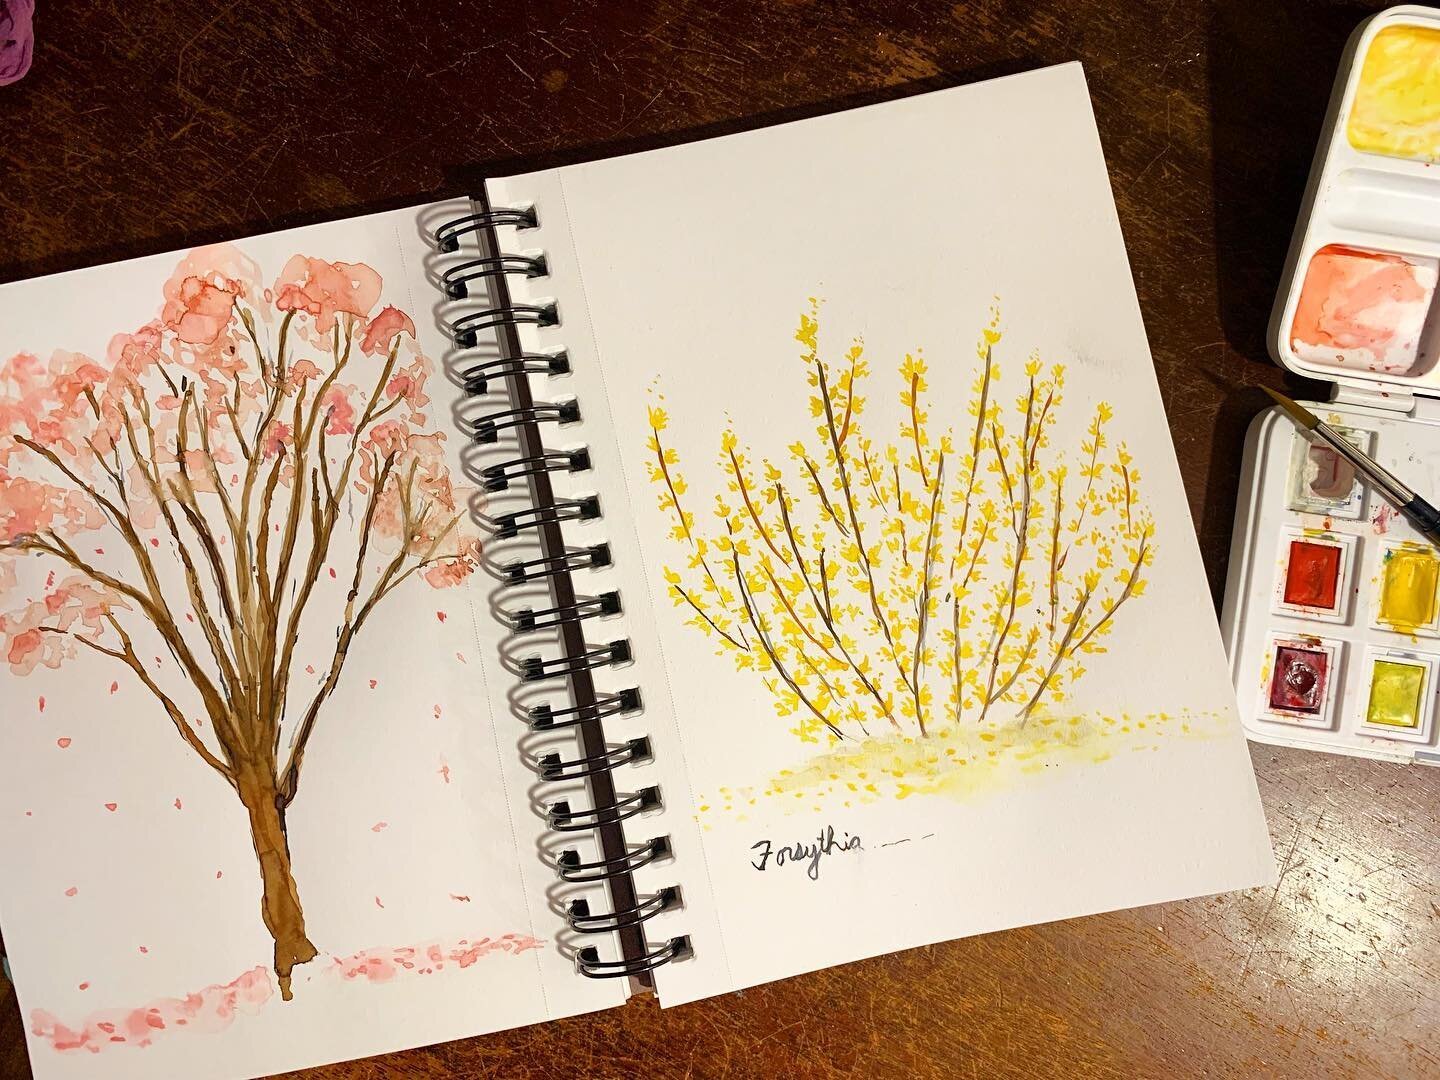 Watercolor blooms ✨💐 
#quicksketch #7minutesketch #watercolor #illustration #inksketch #vintagevibes #sketchbook #spring #springflowers #watercolorsketch #vintagestyle